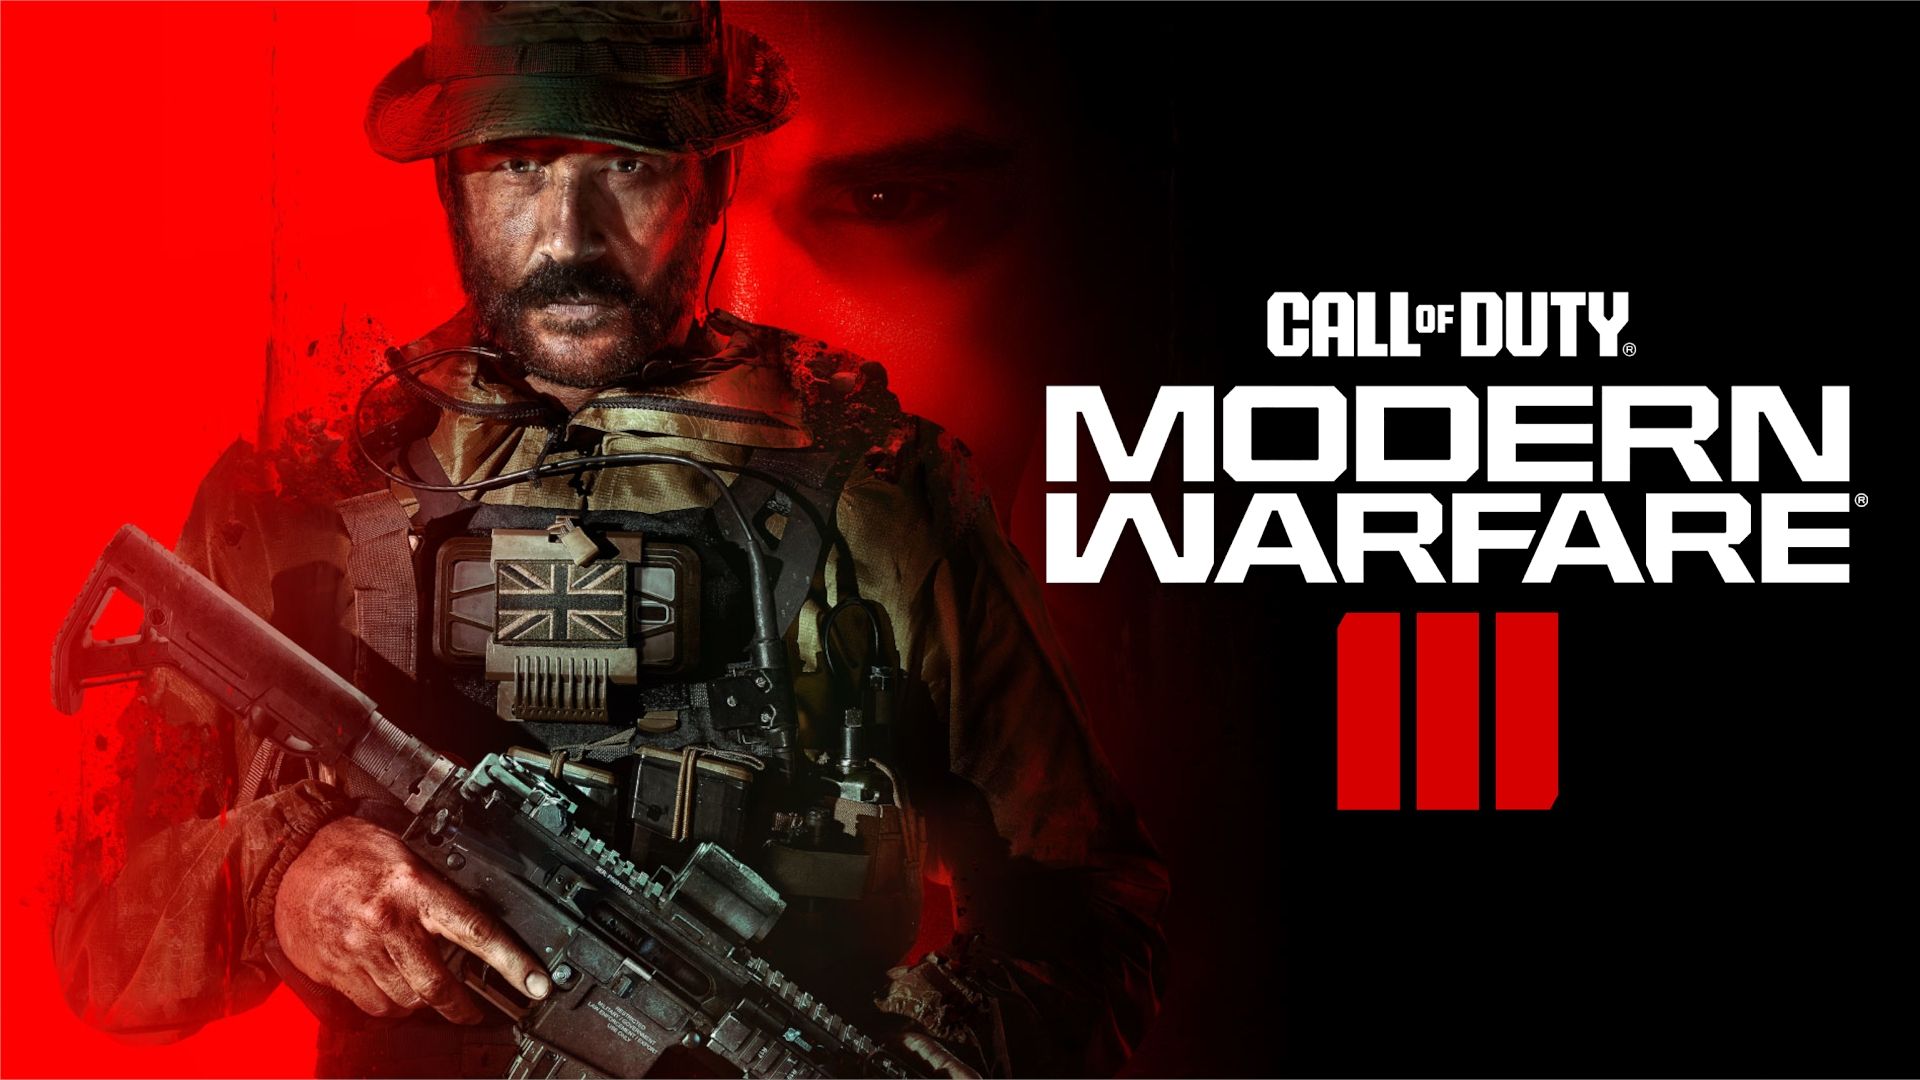 The War Has Changed - Call of Duty: Modern Warfare III